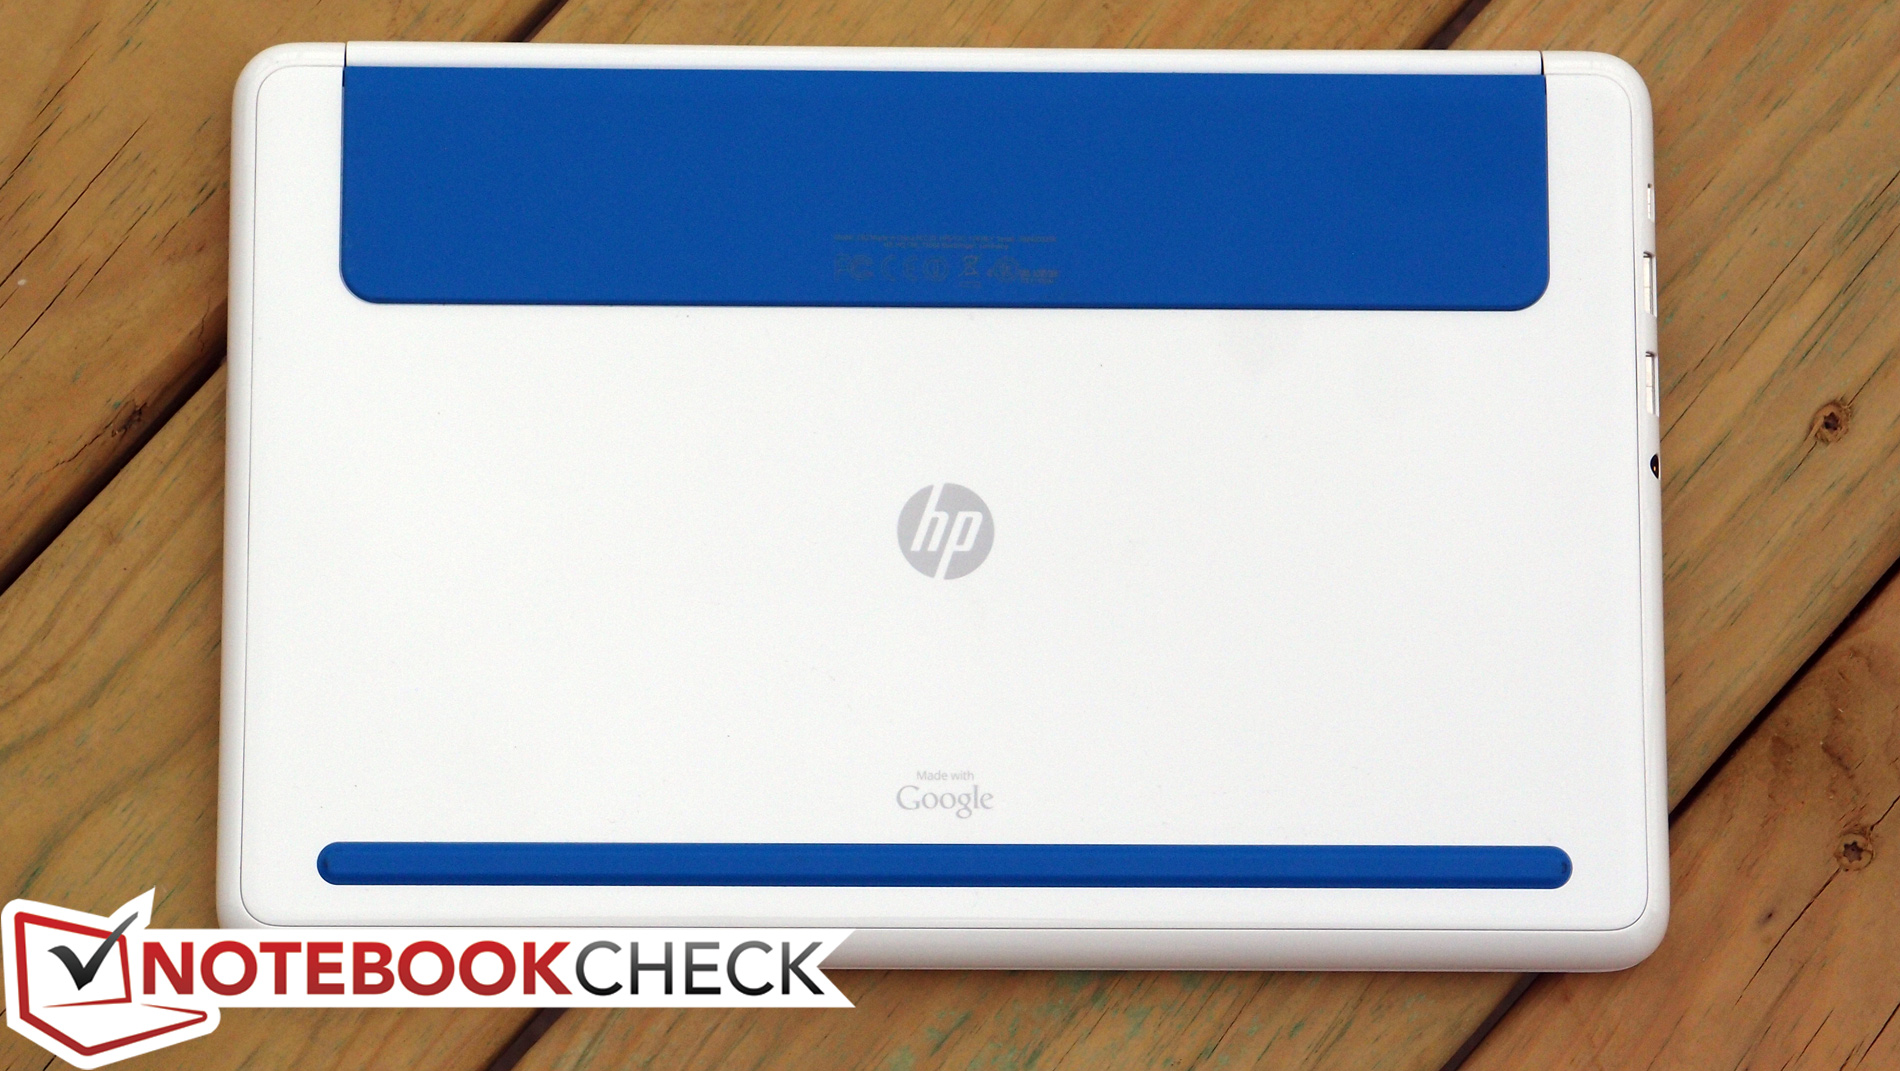 Test HP Chromebook 11 - Notebookcheck.com Tests